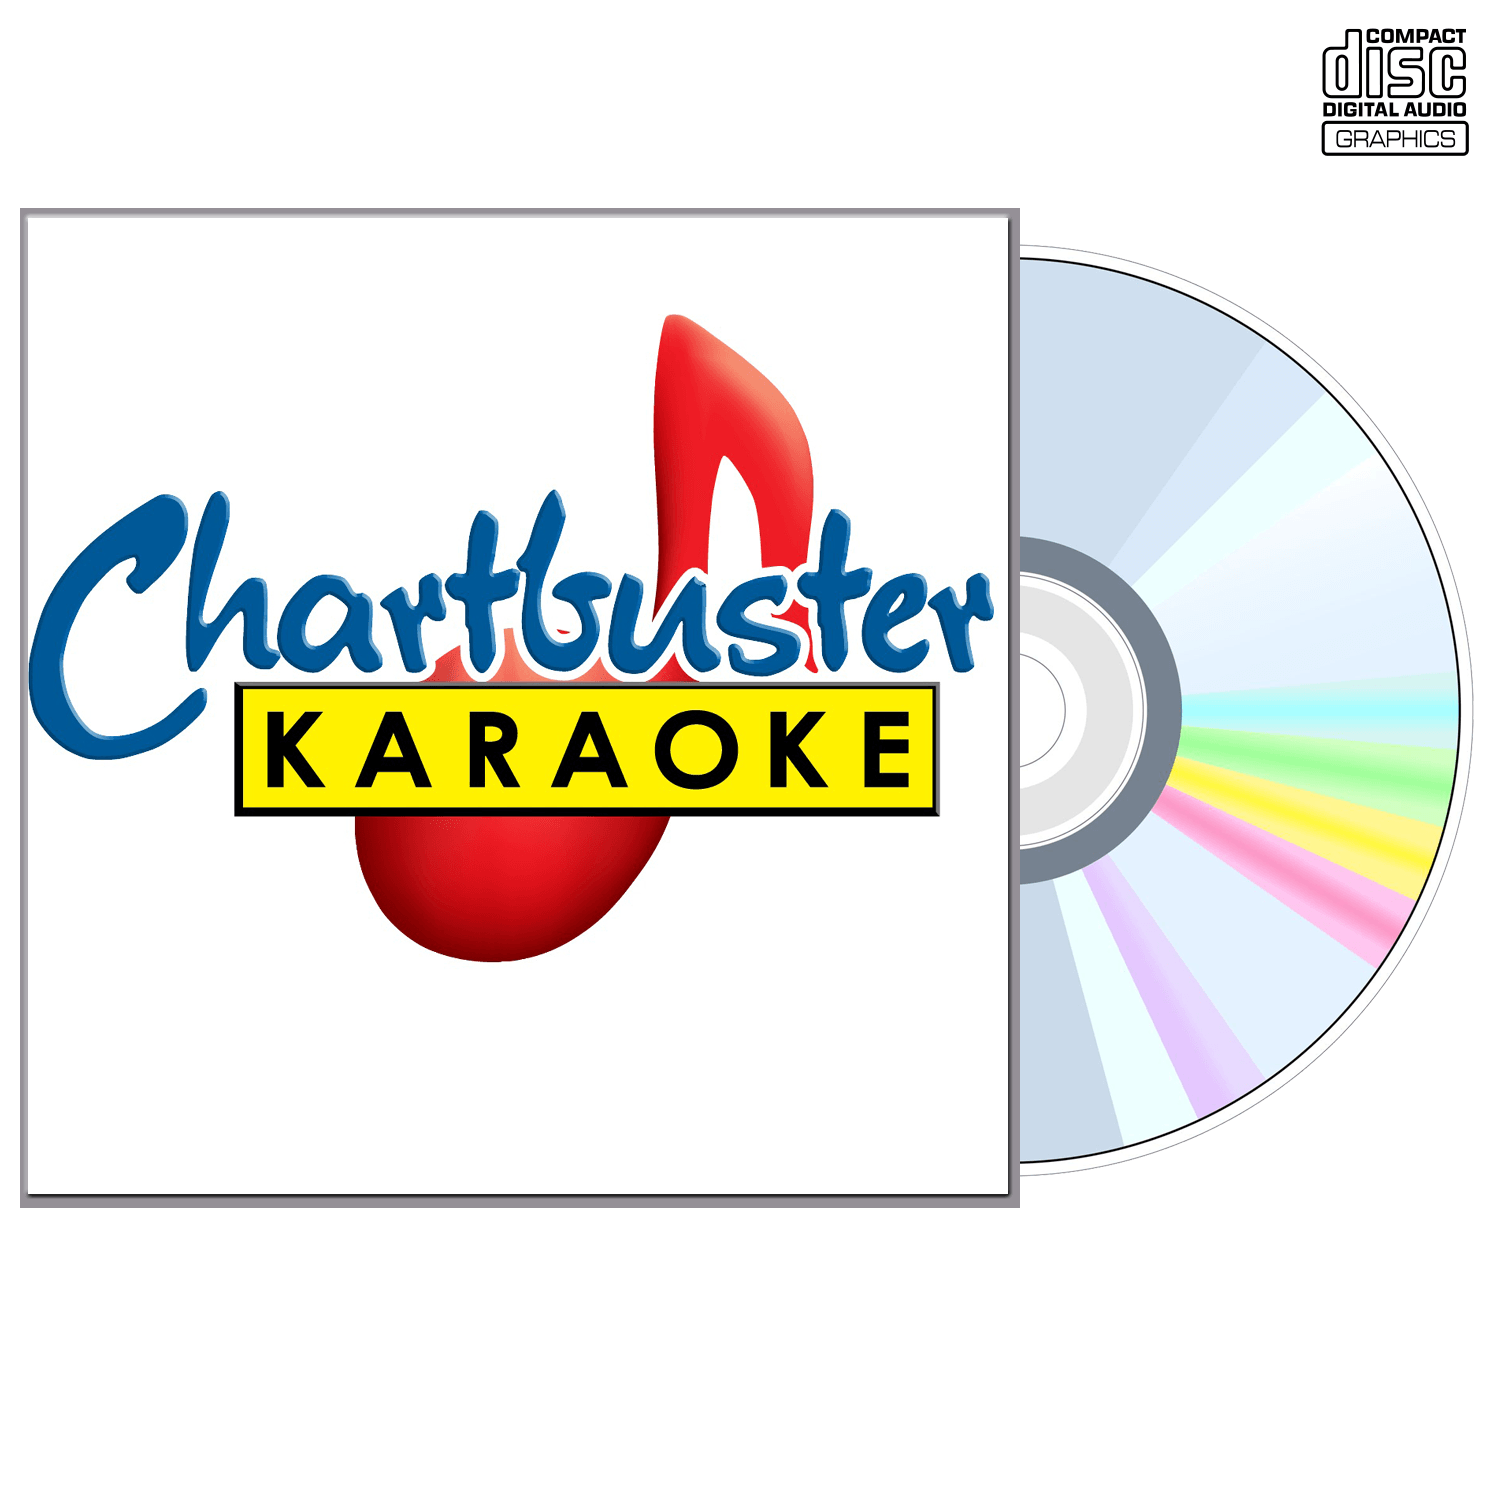 Ultimate 90's Collection V03 - CD+G - Chartbuster Karaoke - Karaoke Home Entertainment